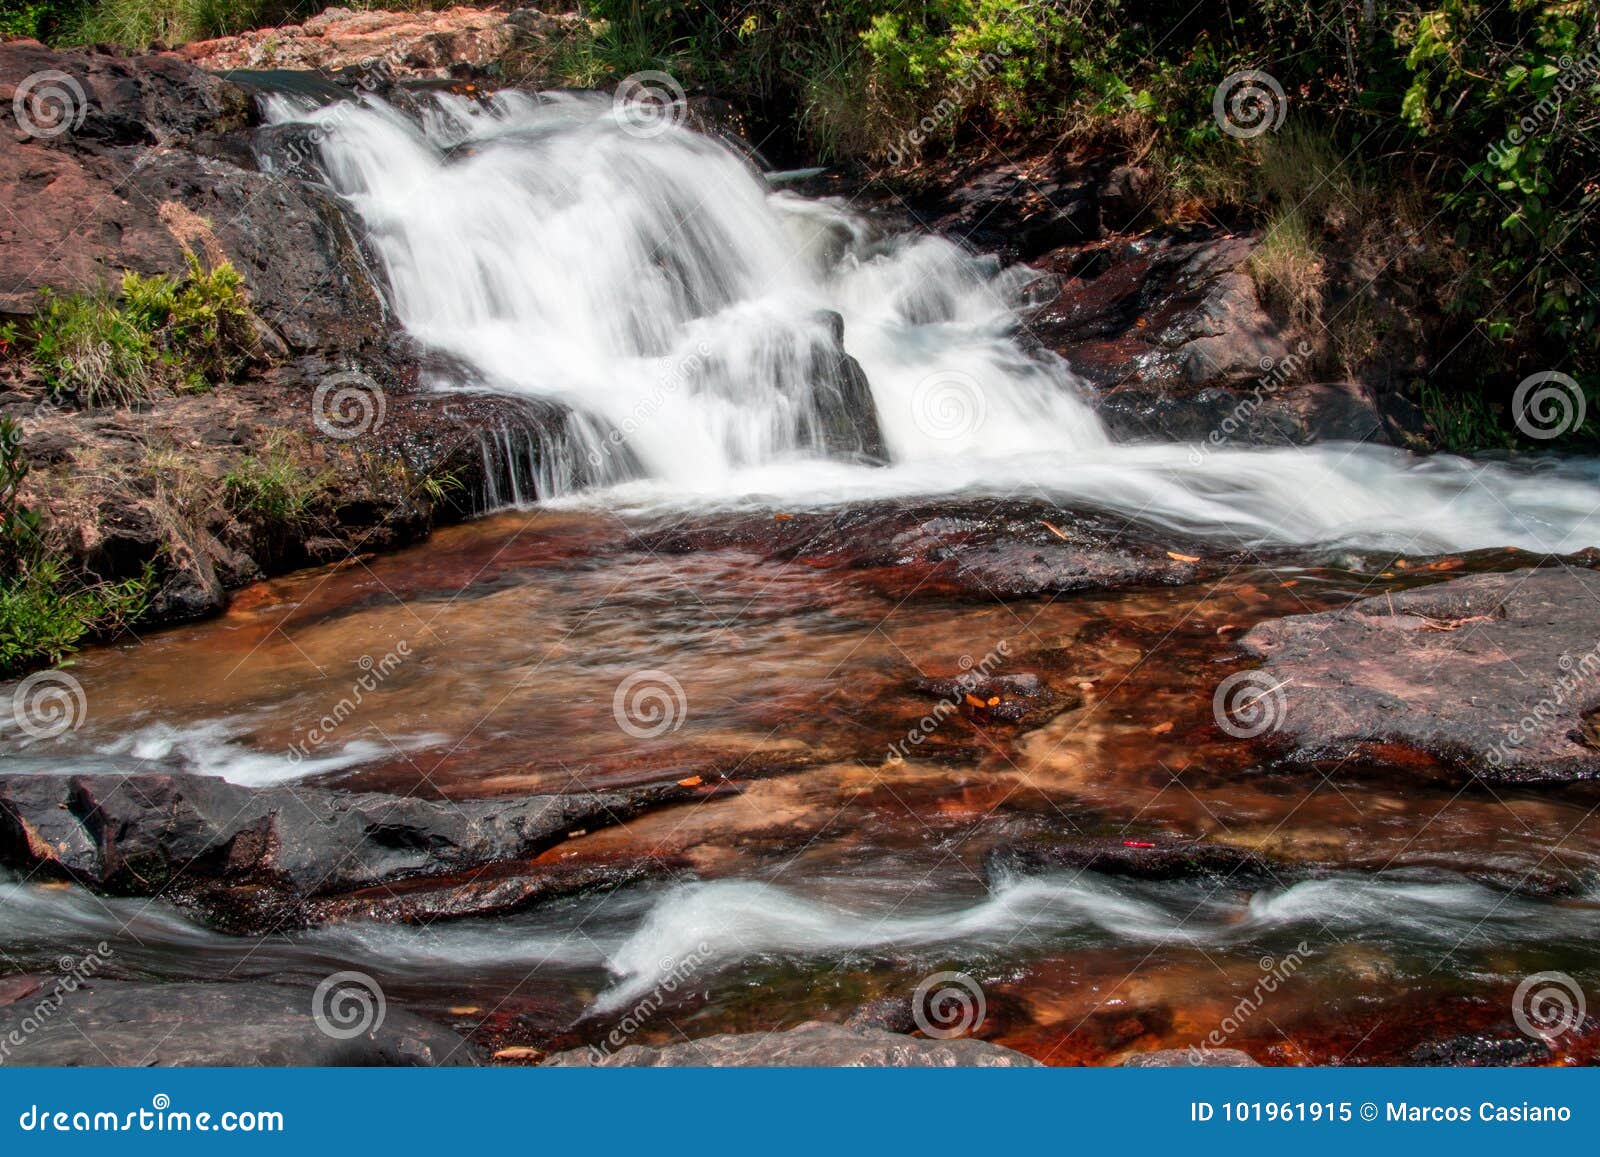 indaia waterfall